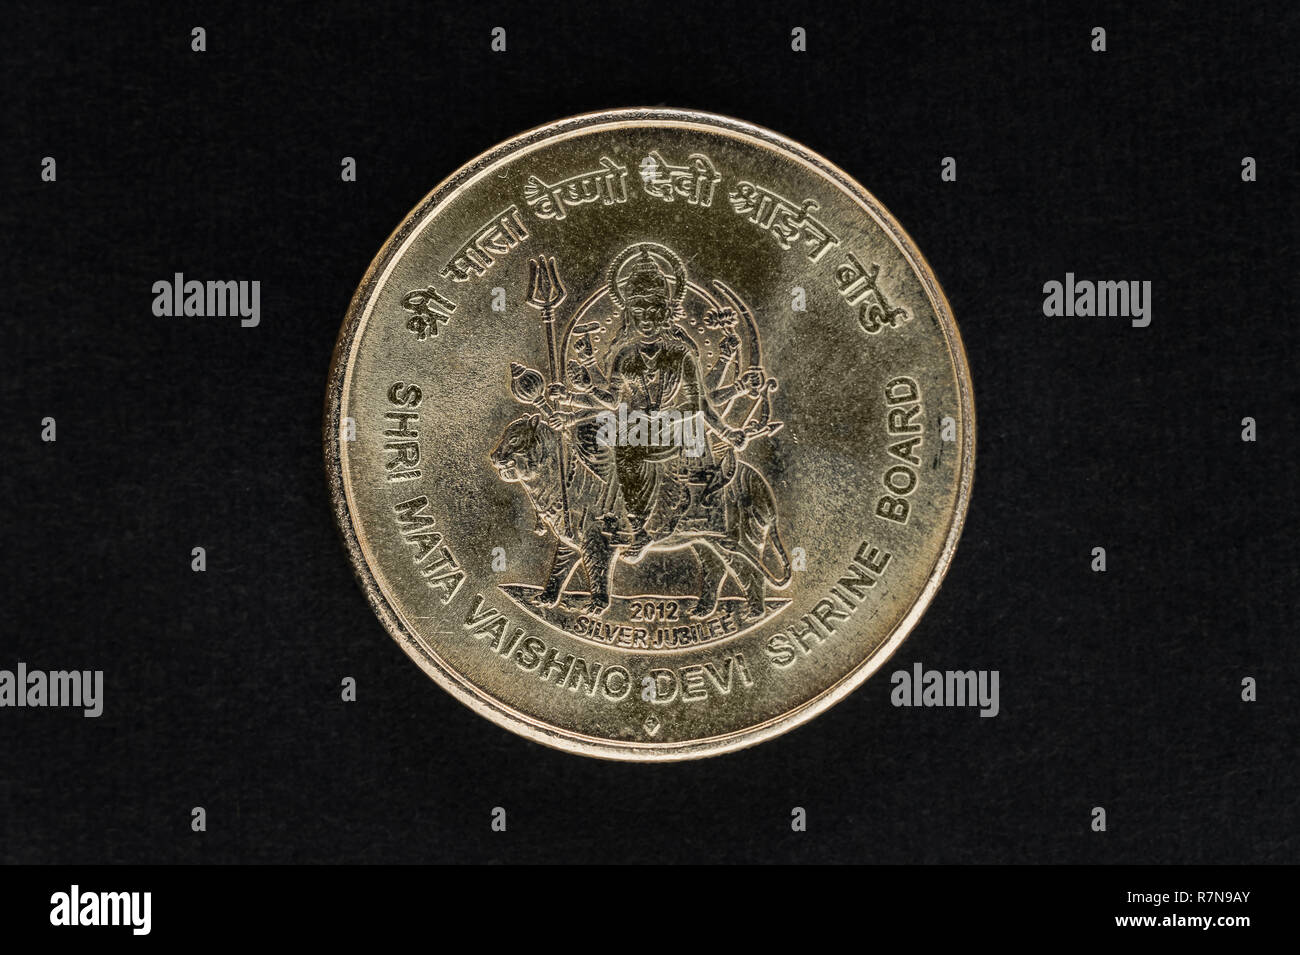 04-Oct-2015 5 Rupees coin Shri Mata Vaishno Devi Shrine Board-2012 INDIA  asia Stock Photo - Alamy